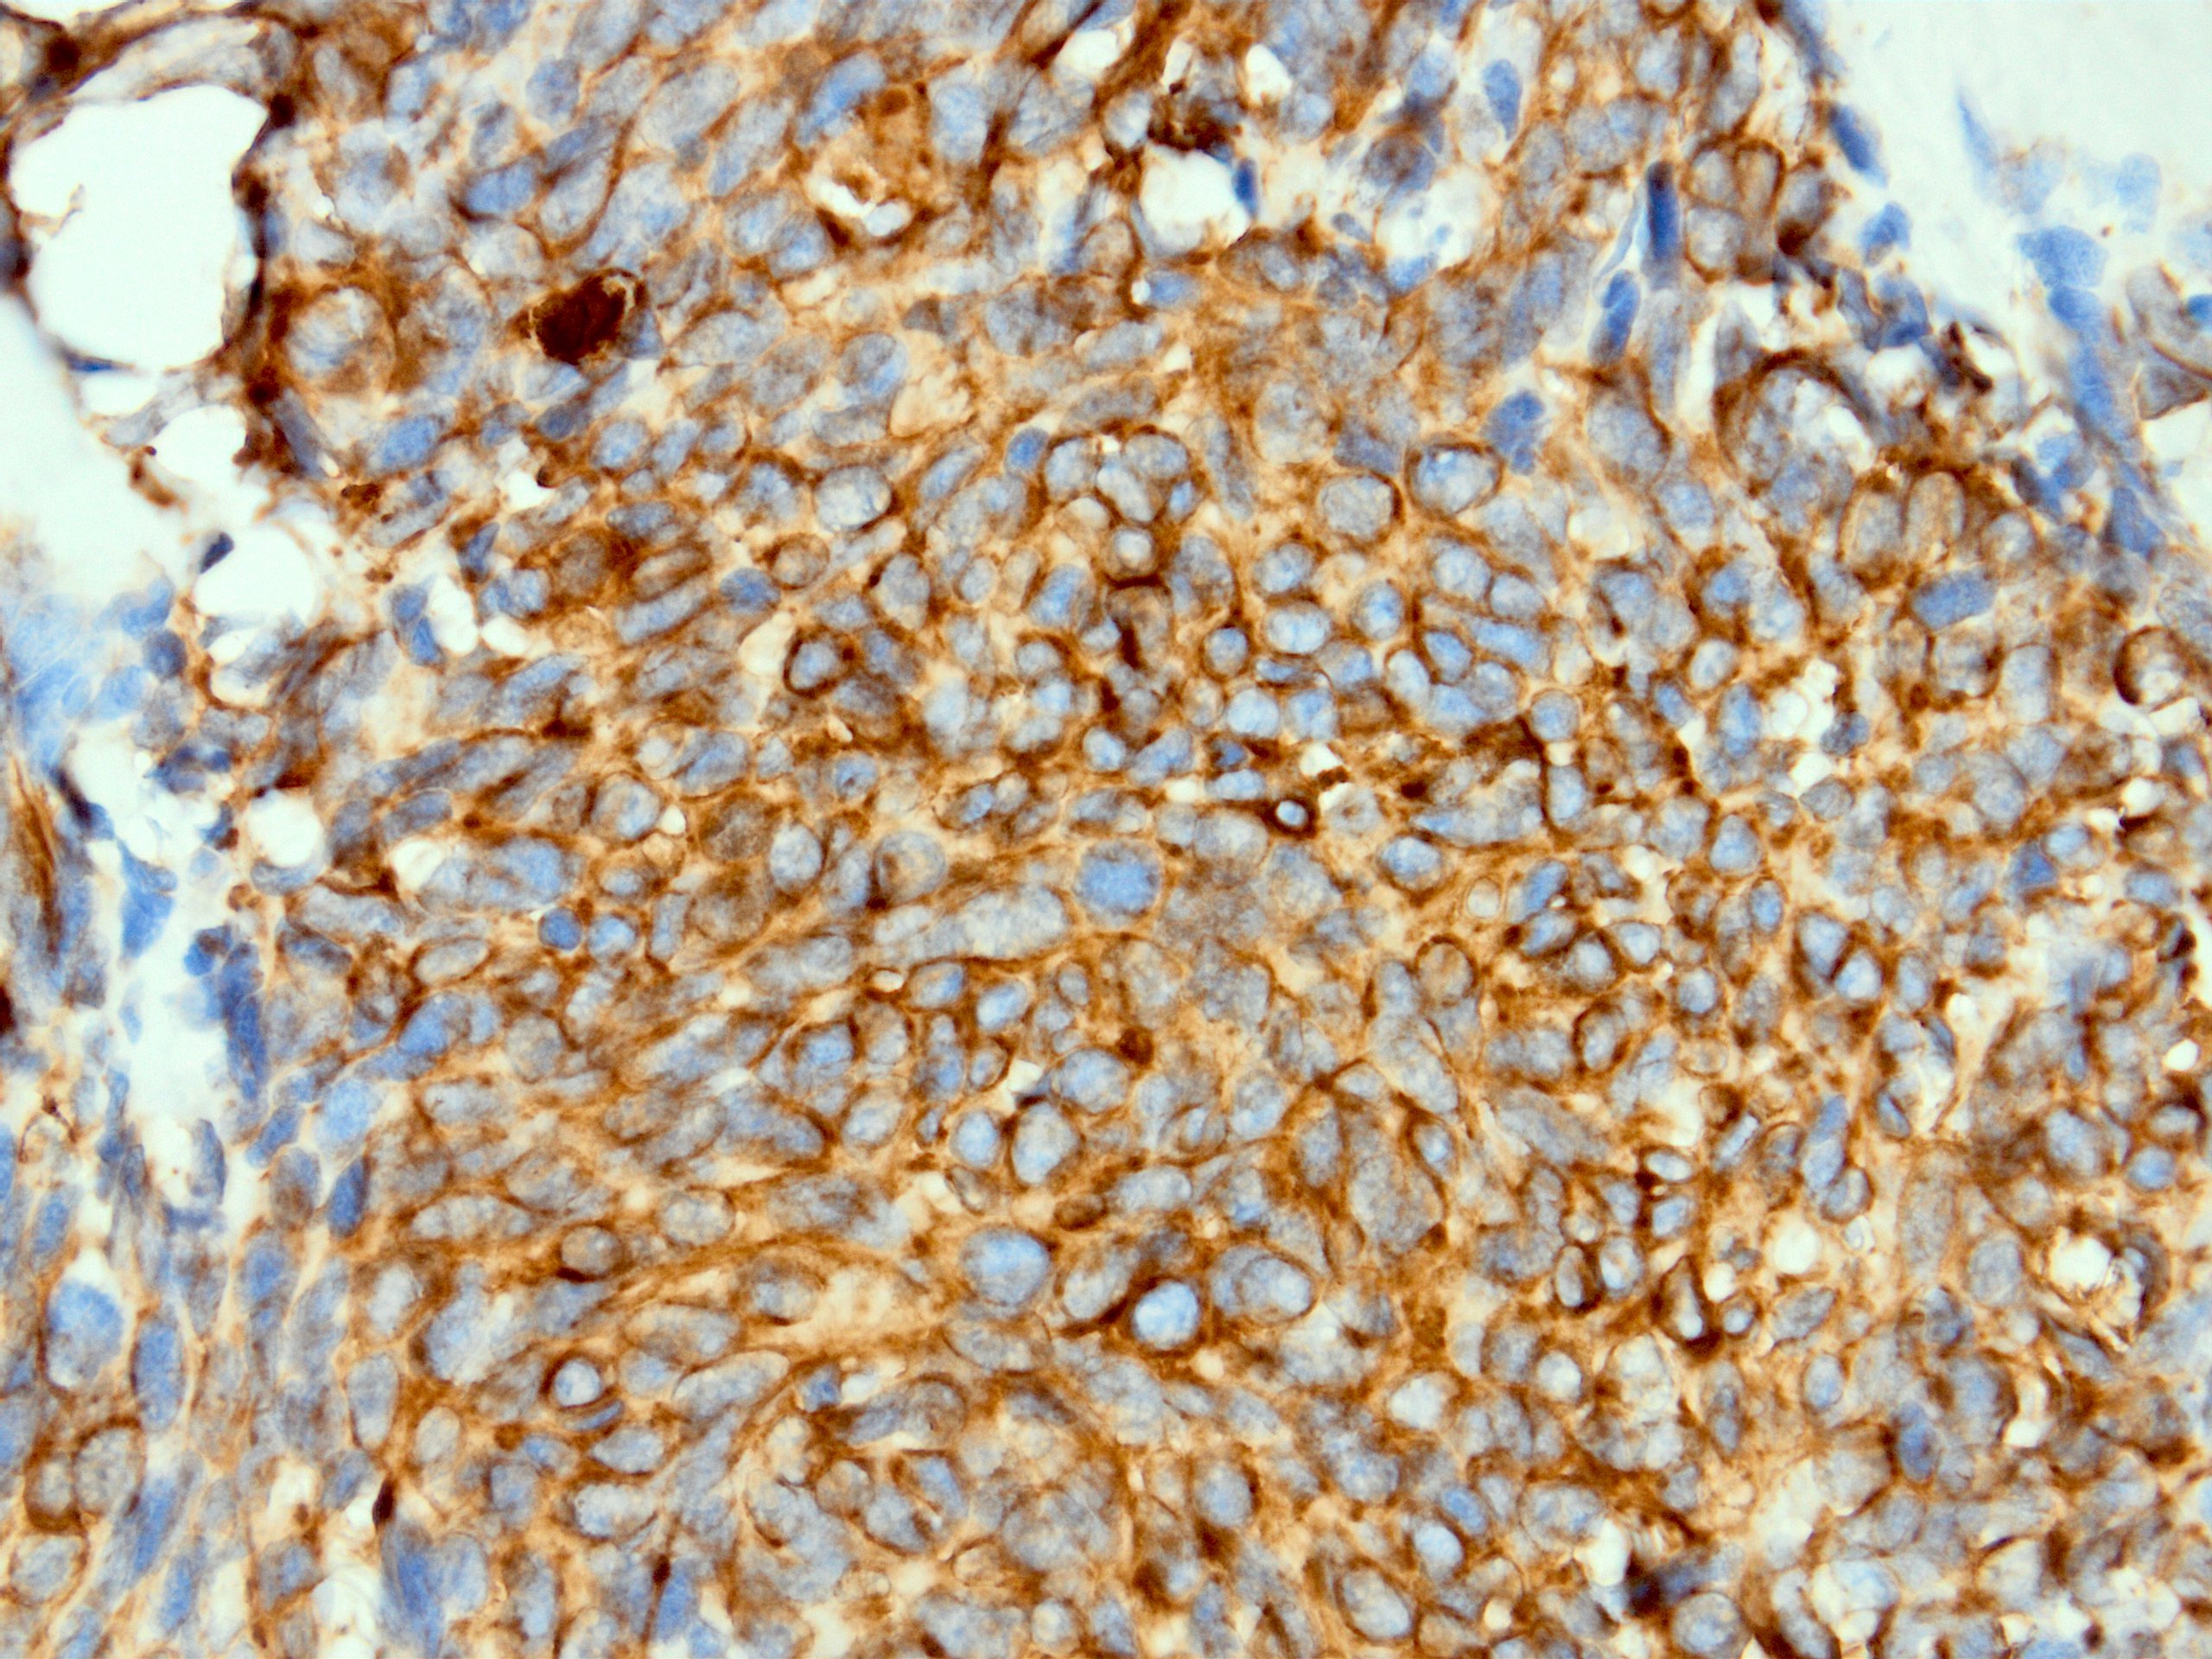 CAM 5.2 in desmoplastic small round cell tumor